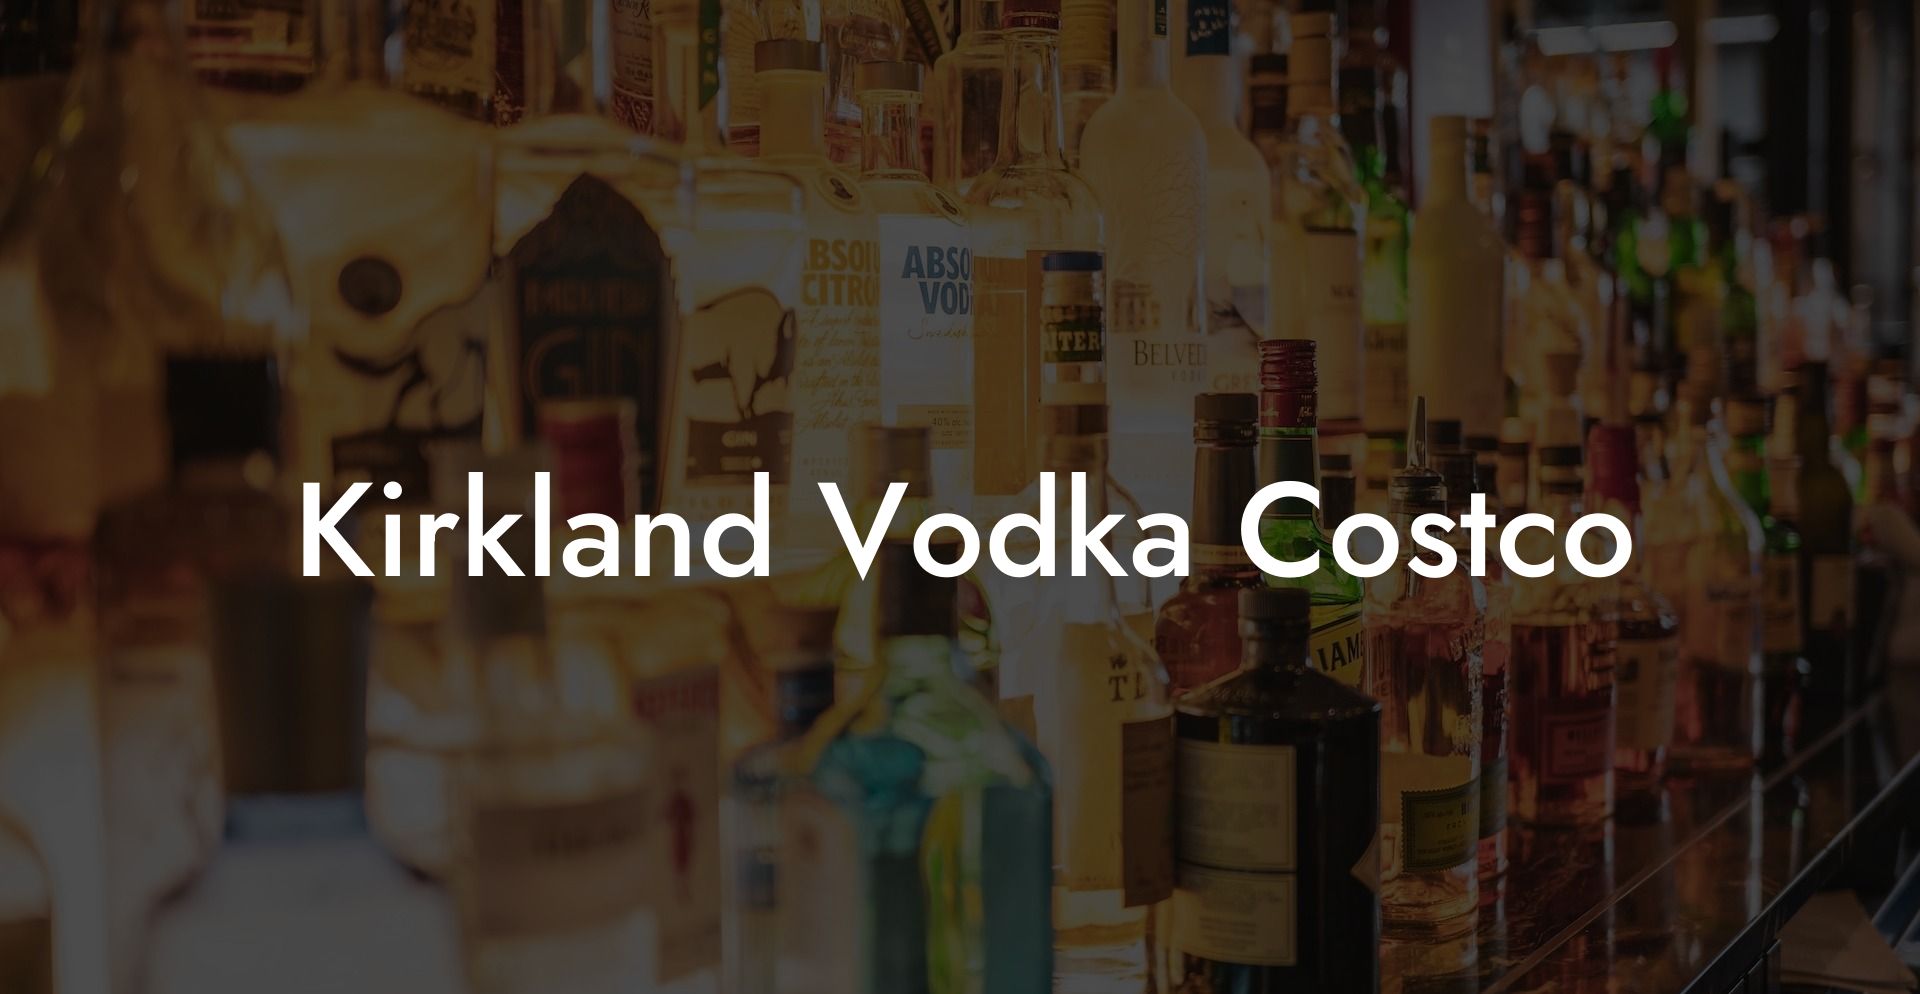 Kirkland Vodka Costco